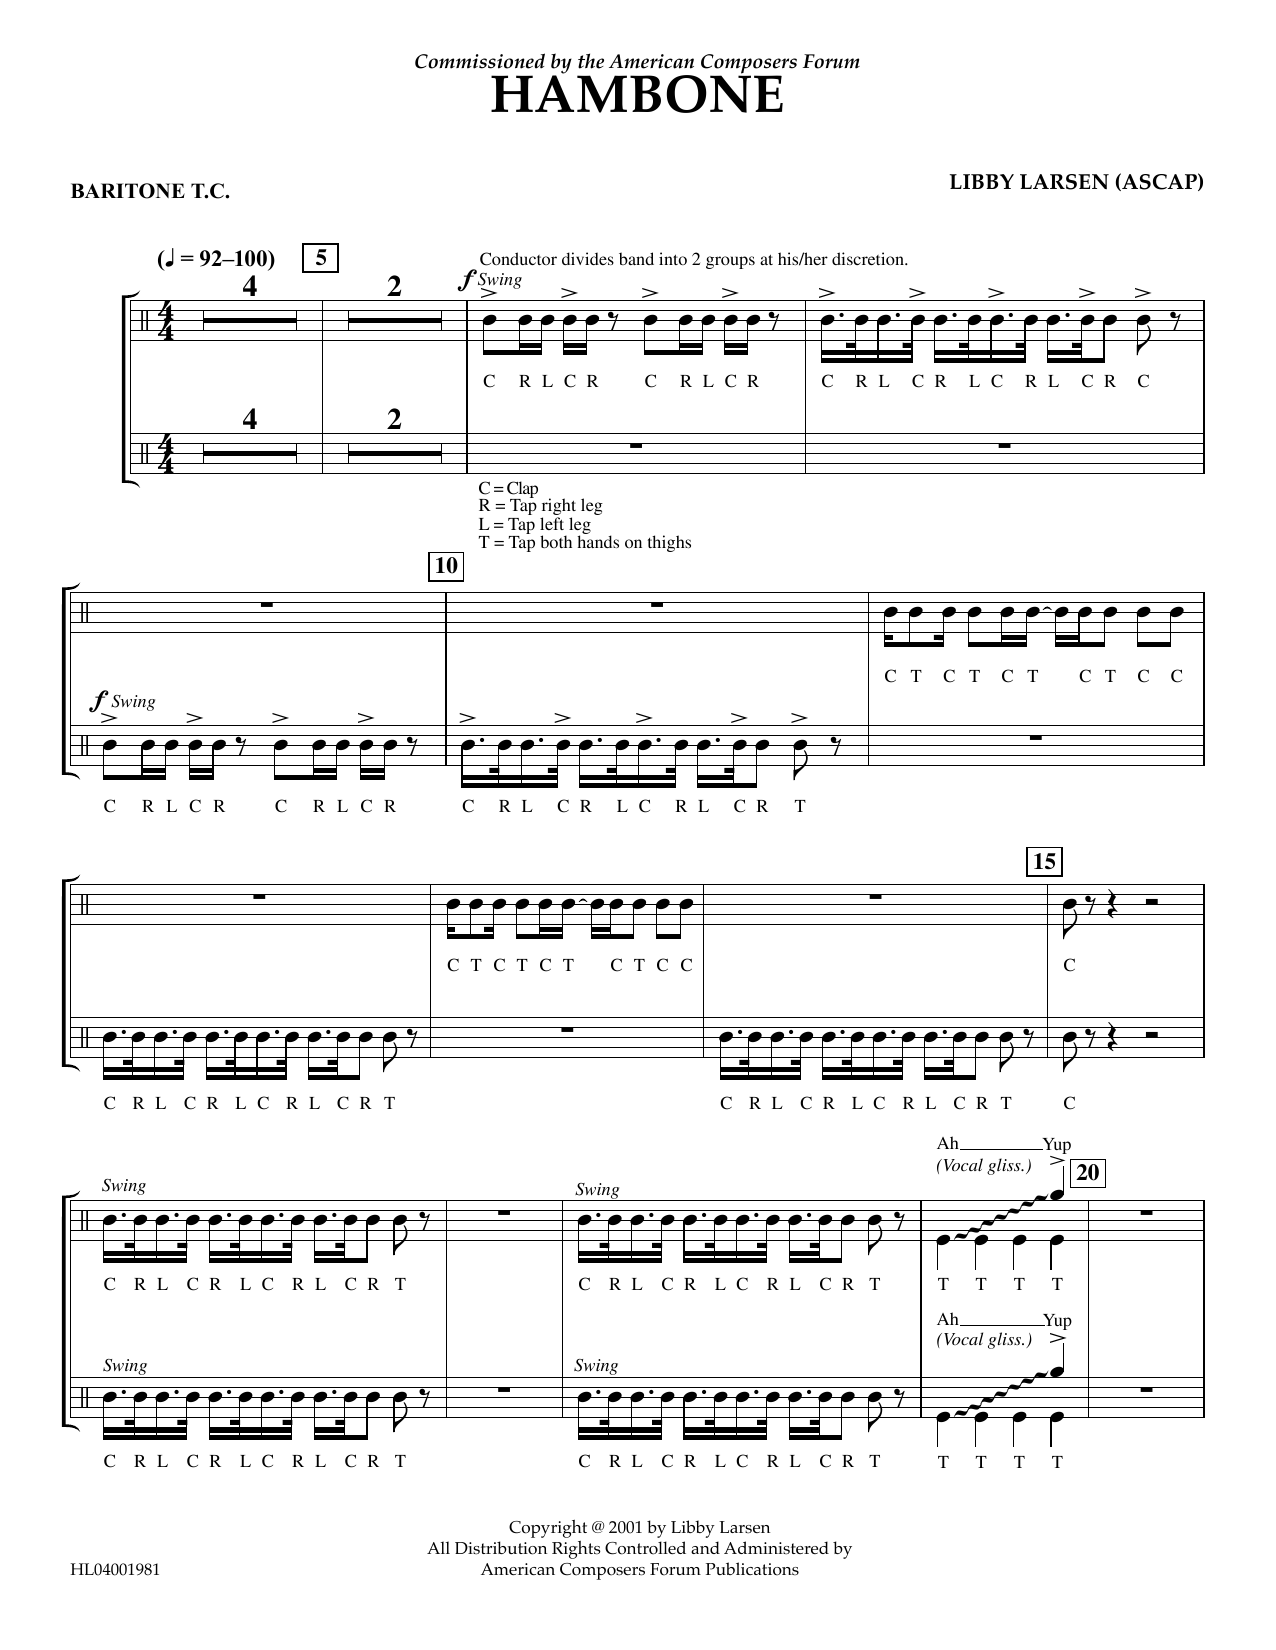 Download Libby Larsen Hambone - Euphonium in Treble Clef Sheet Music